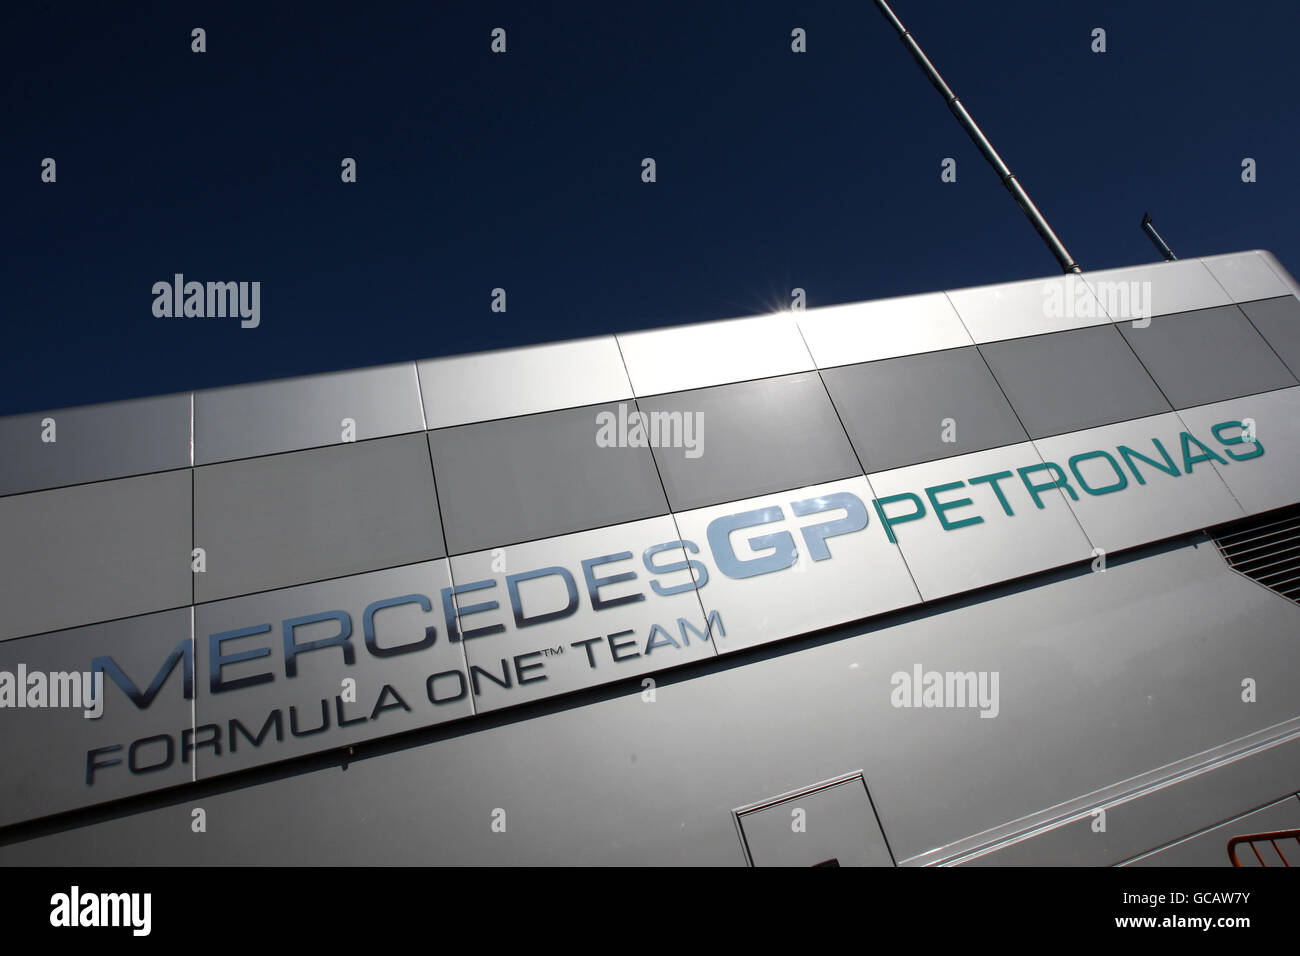 File:Mercedes AMG Petronas F1 Logo.svg - Wikimedia Commons